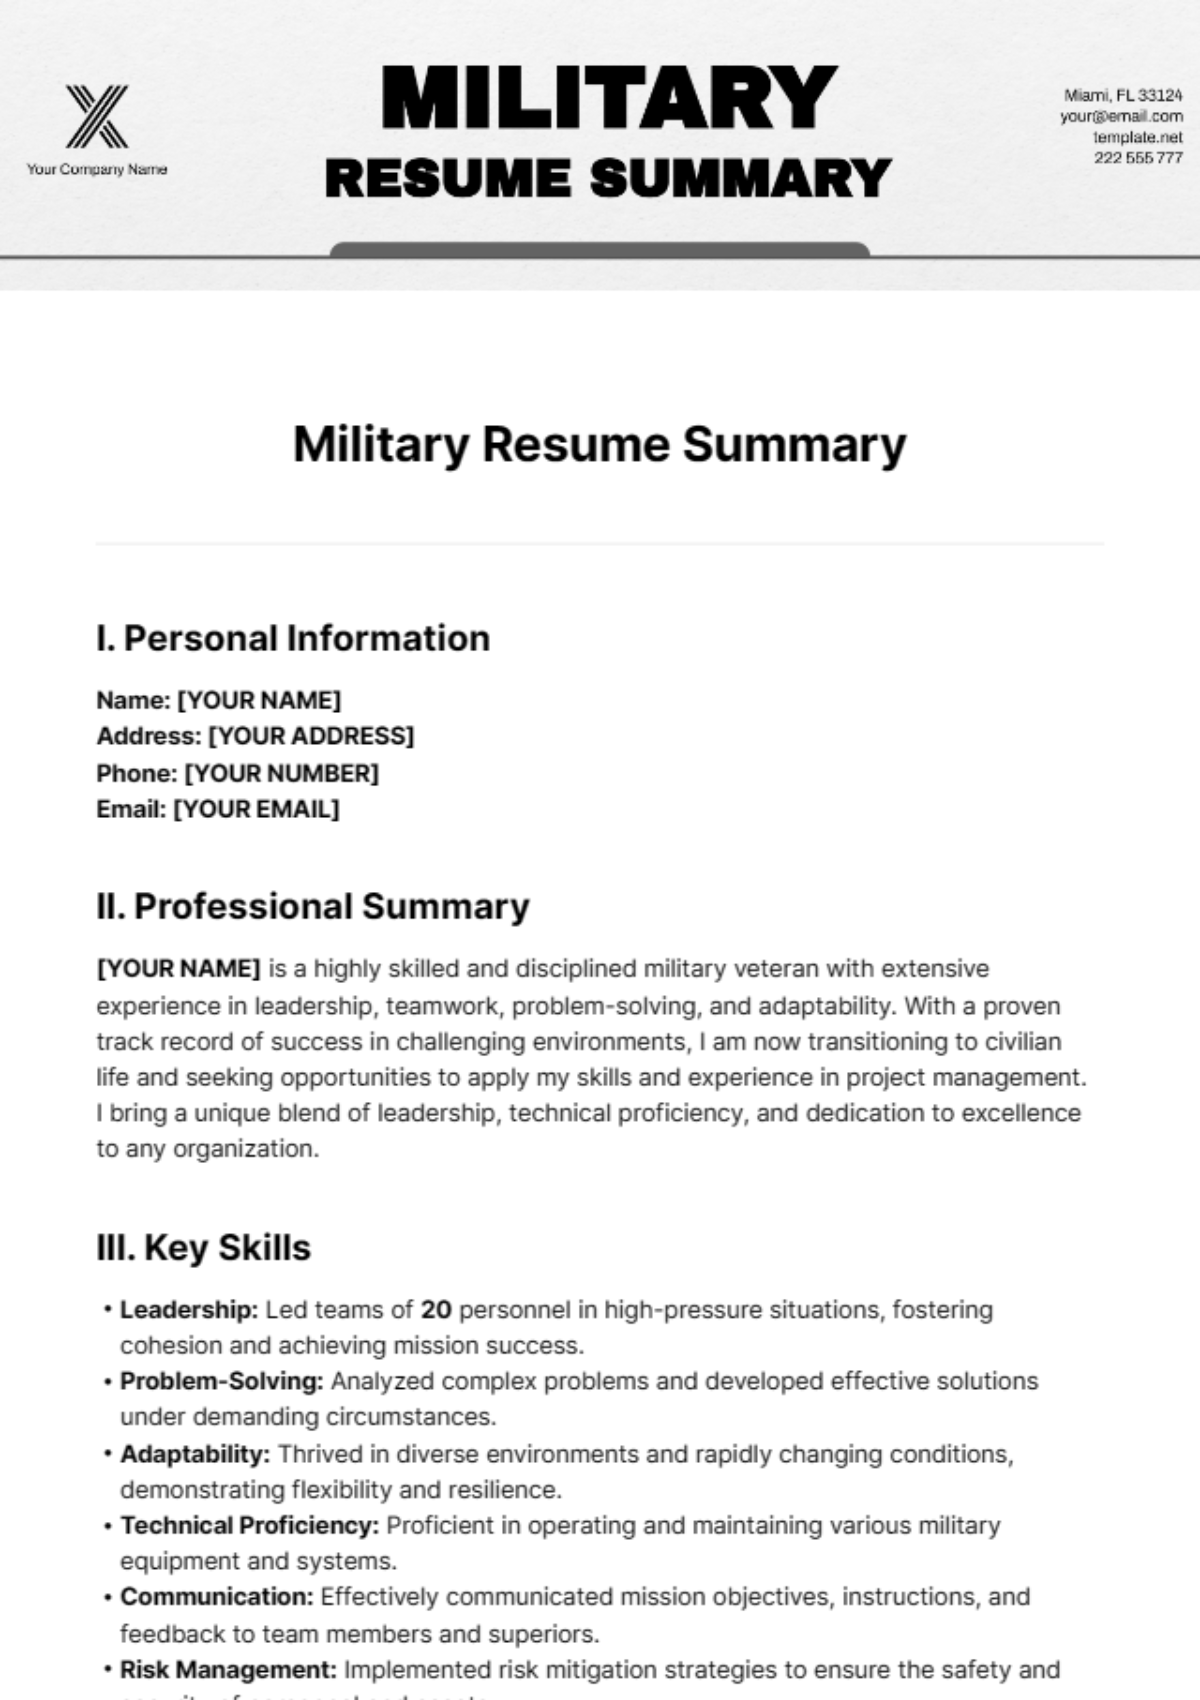 Military Resume Summary Template